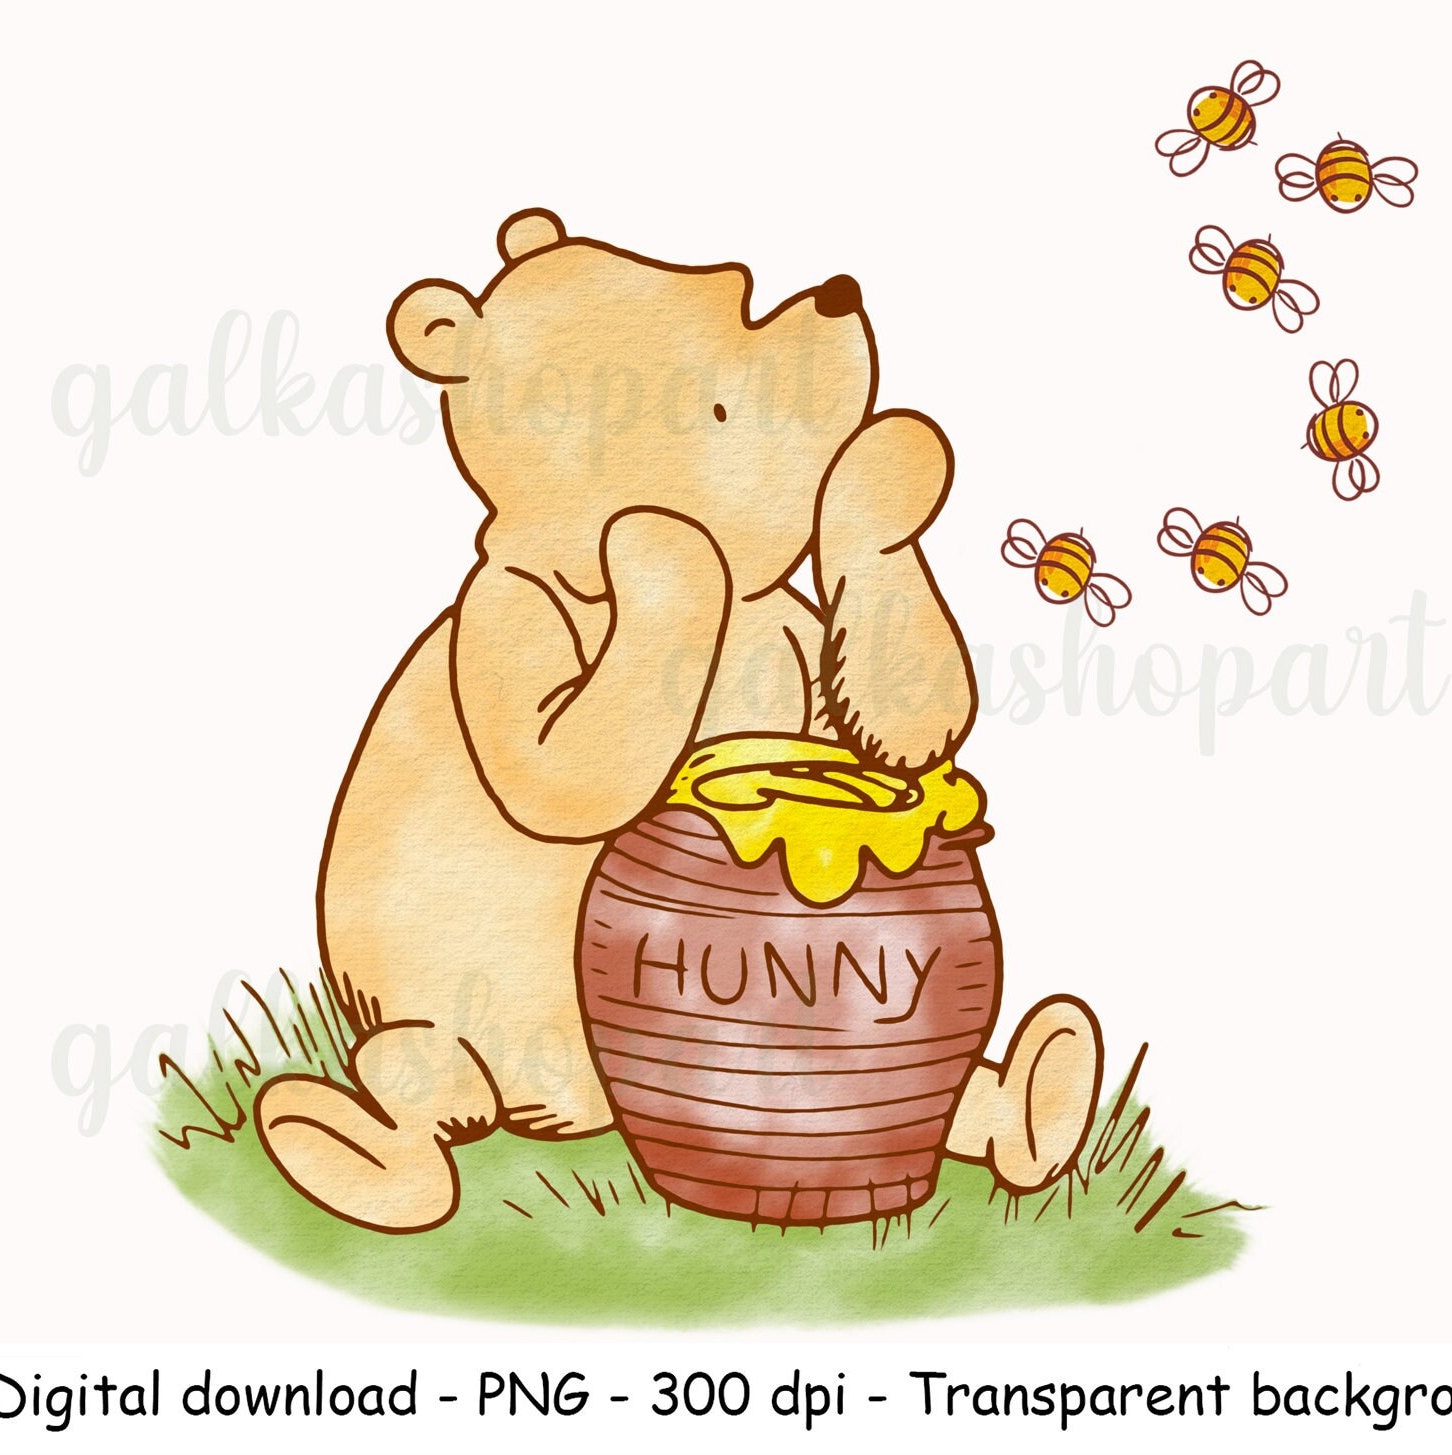 Winnie the Pooh Hunny Pot' Graphic Art Winnie the Pooh Size: 40 cm H x 30  cm W